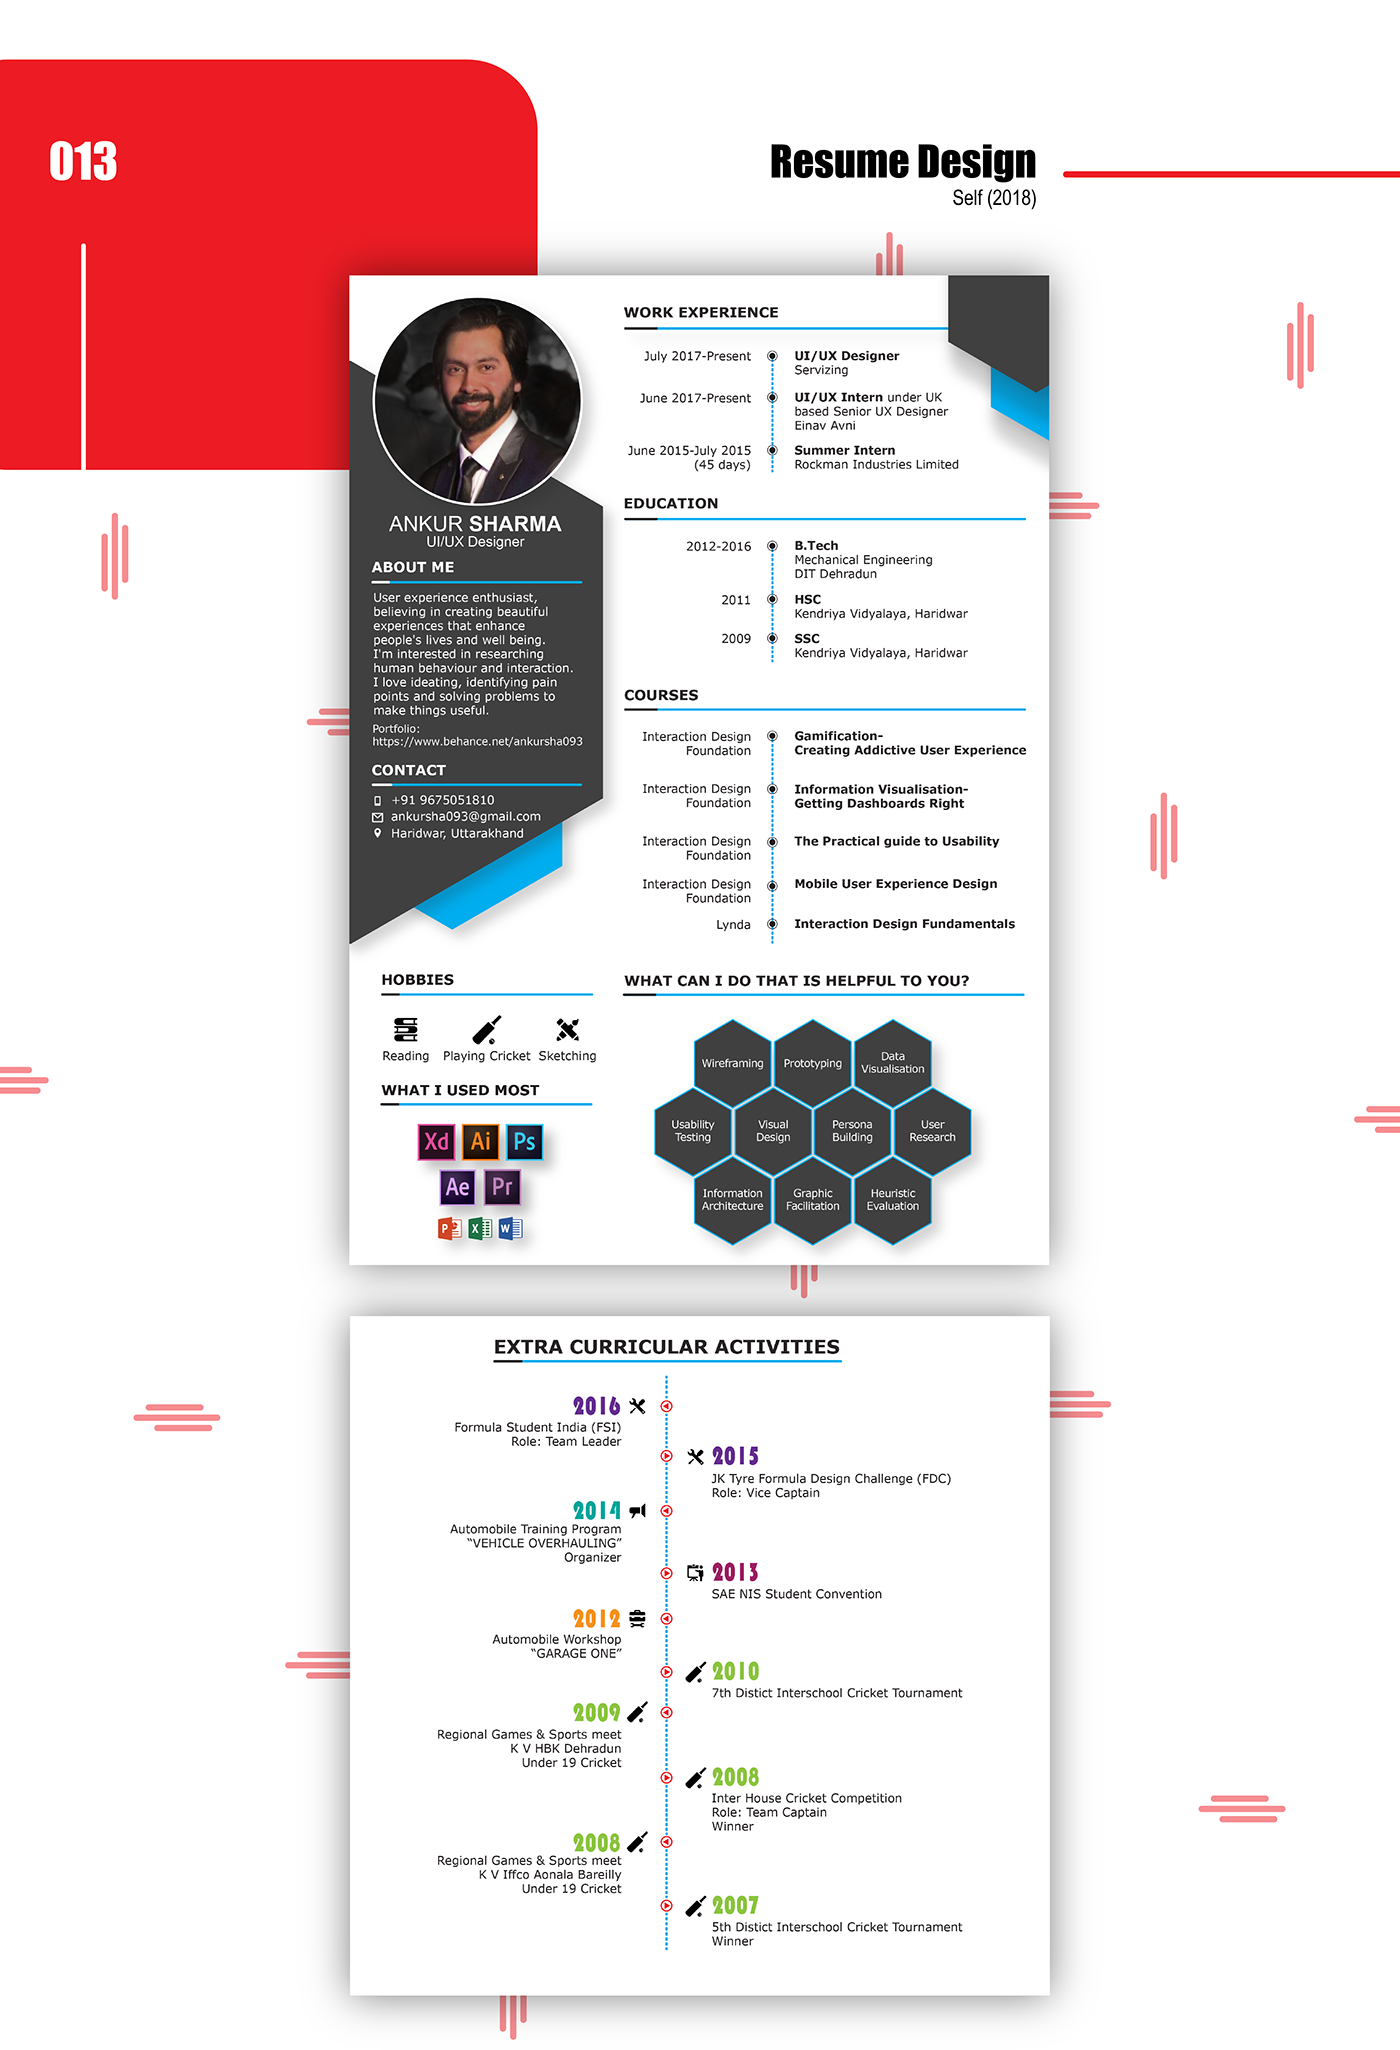 poster infographic creative brochure presentation advertisement user manual #graphic design #photoshop #illustrator